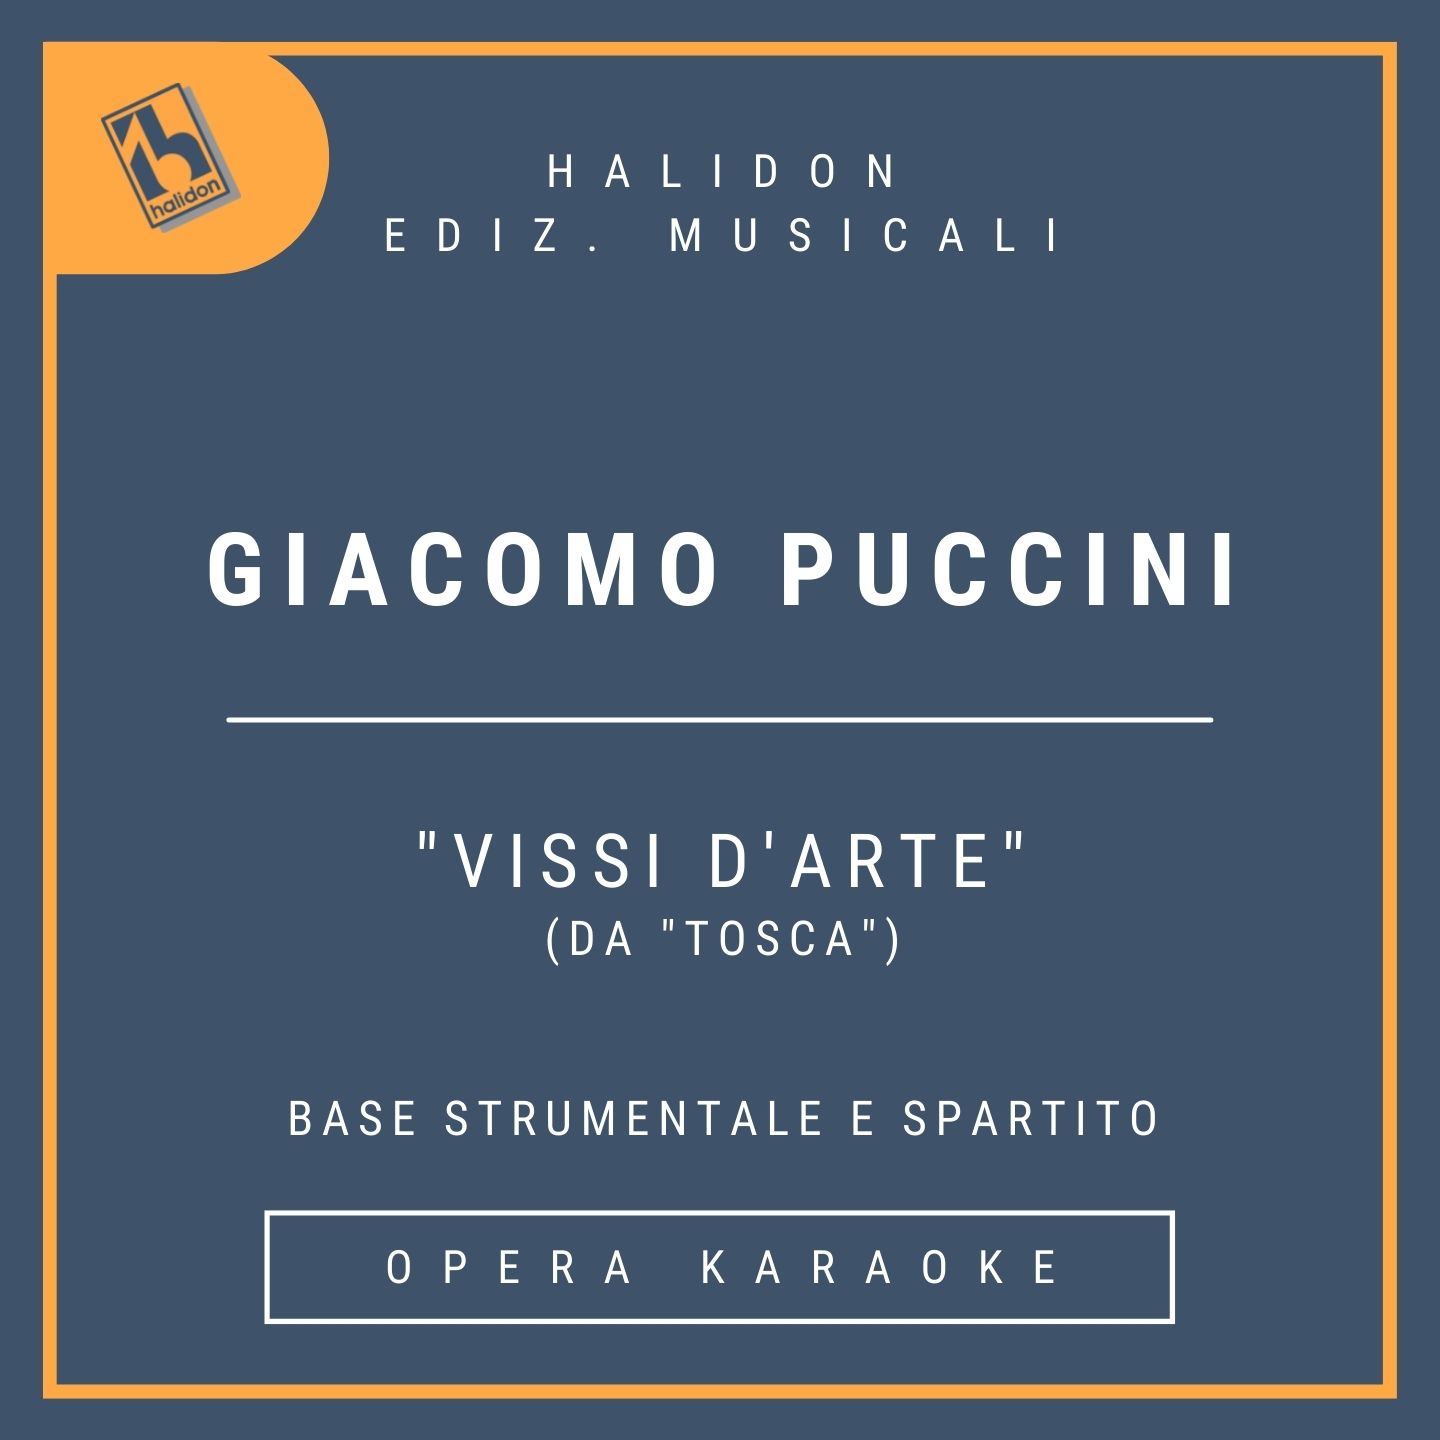 Giacomo Puccini - Vissi d'arte (from 'Tosca') - Tosca's Aria (dramatic soprano) - Instrumental track + sheet